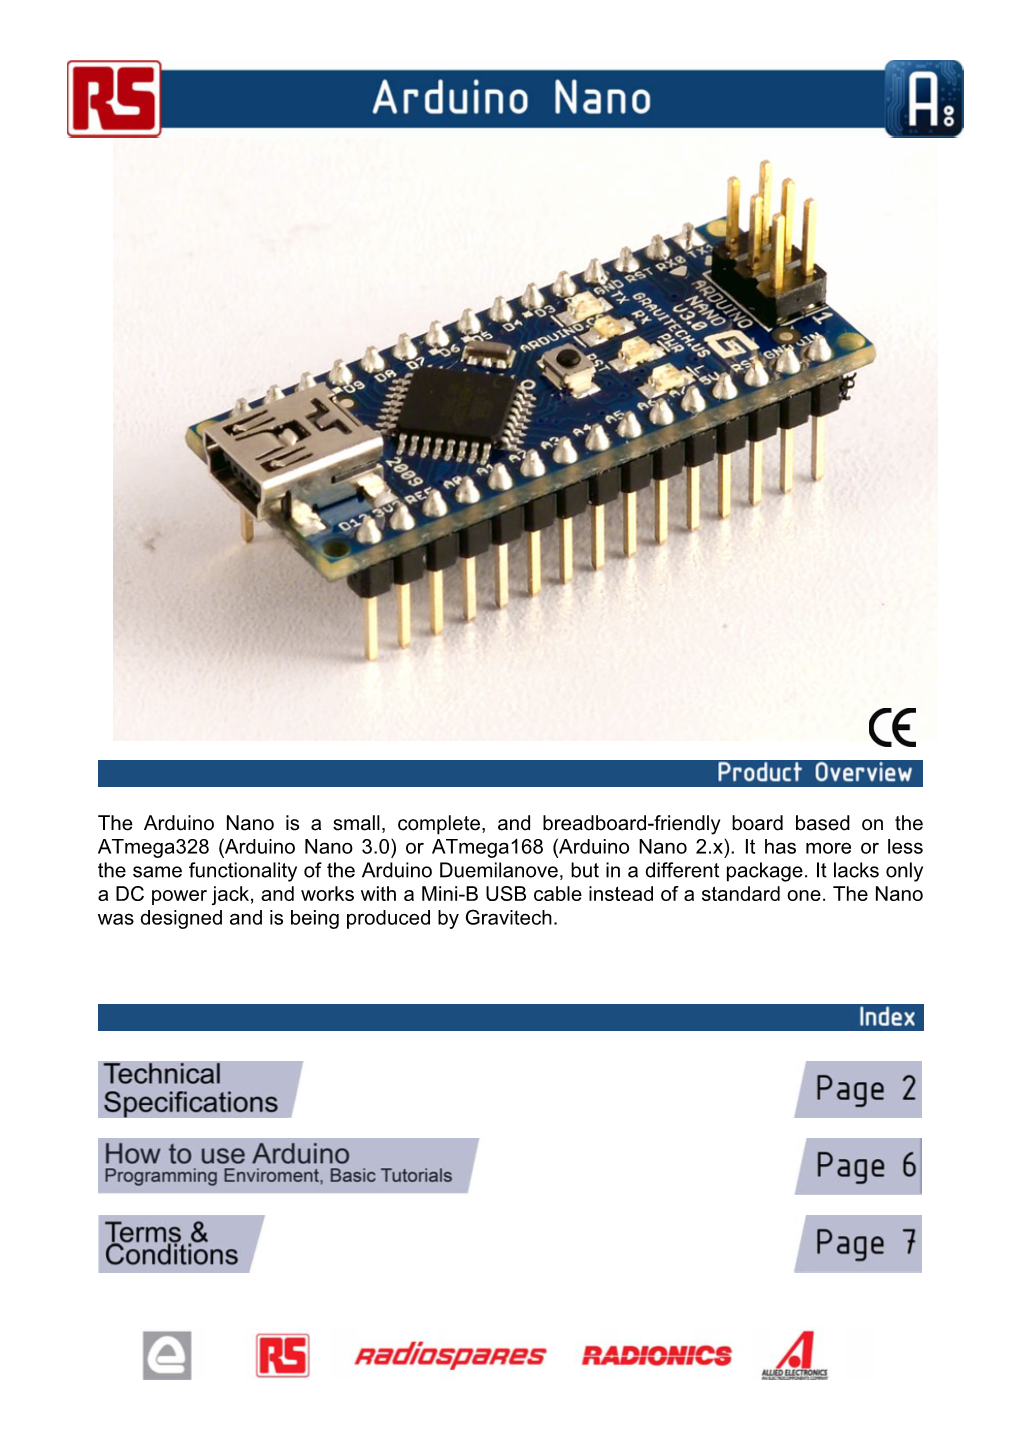 Arduino Nano Is a Small, Complete, and Breadboard-Friendly Board Based on the Atmega328 (Arduino Nano 3.0) Or Atmega168 (Arduino Nano 2.X)